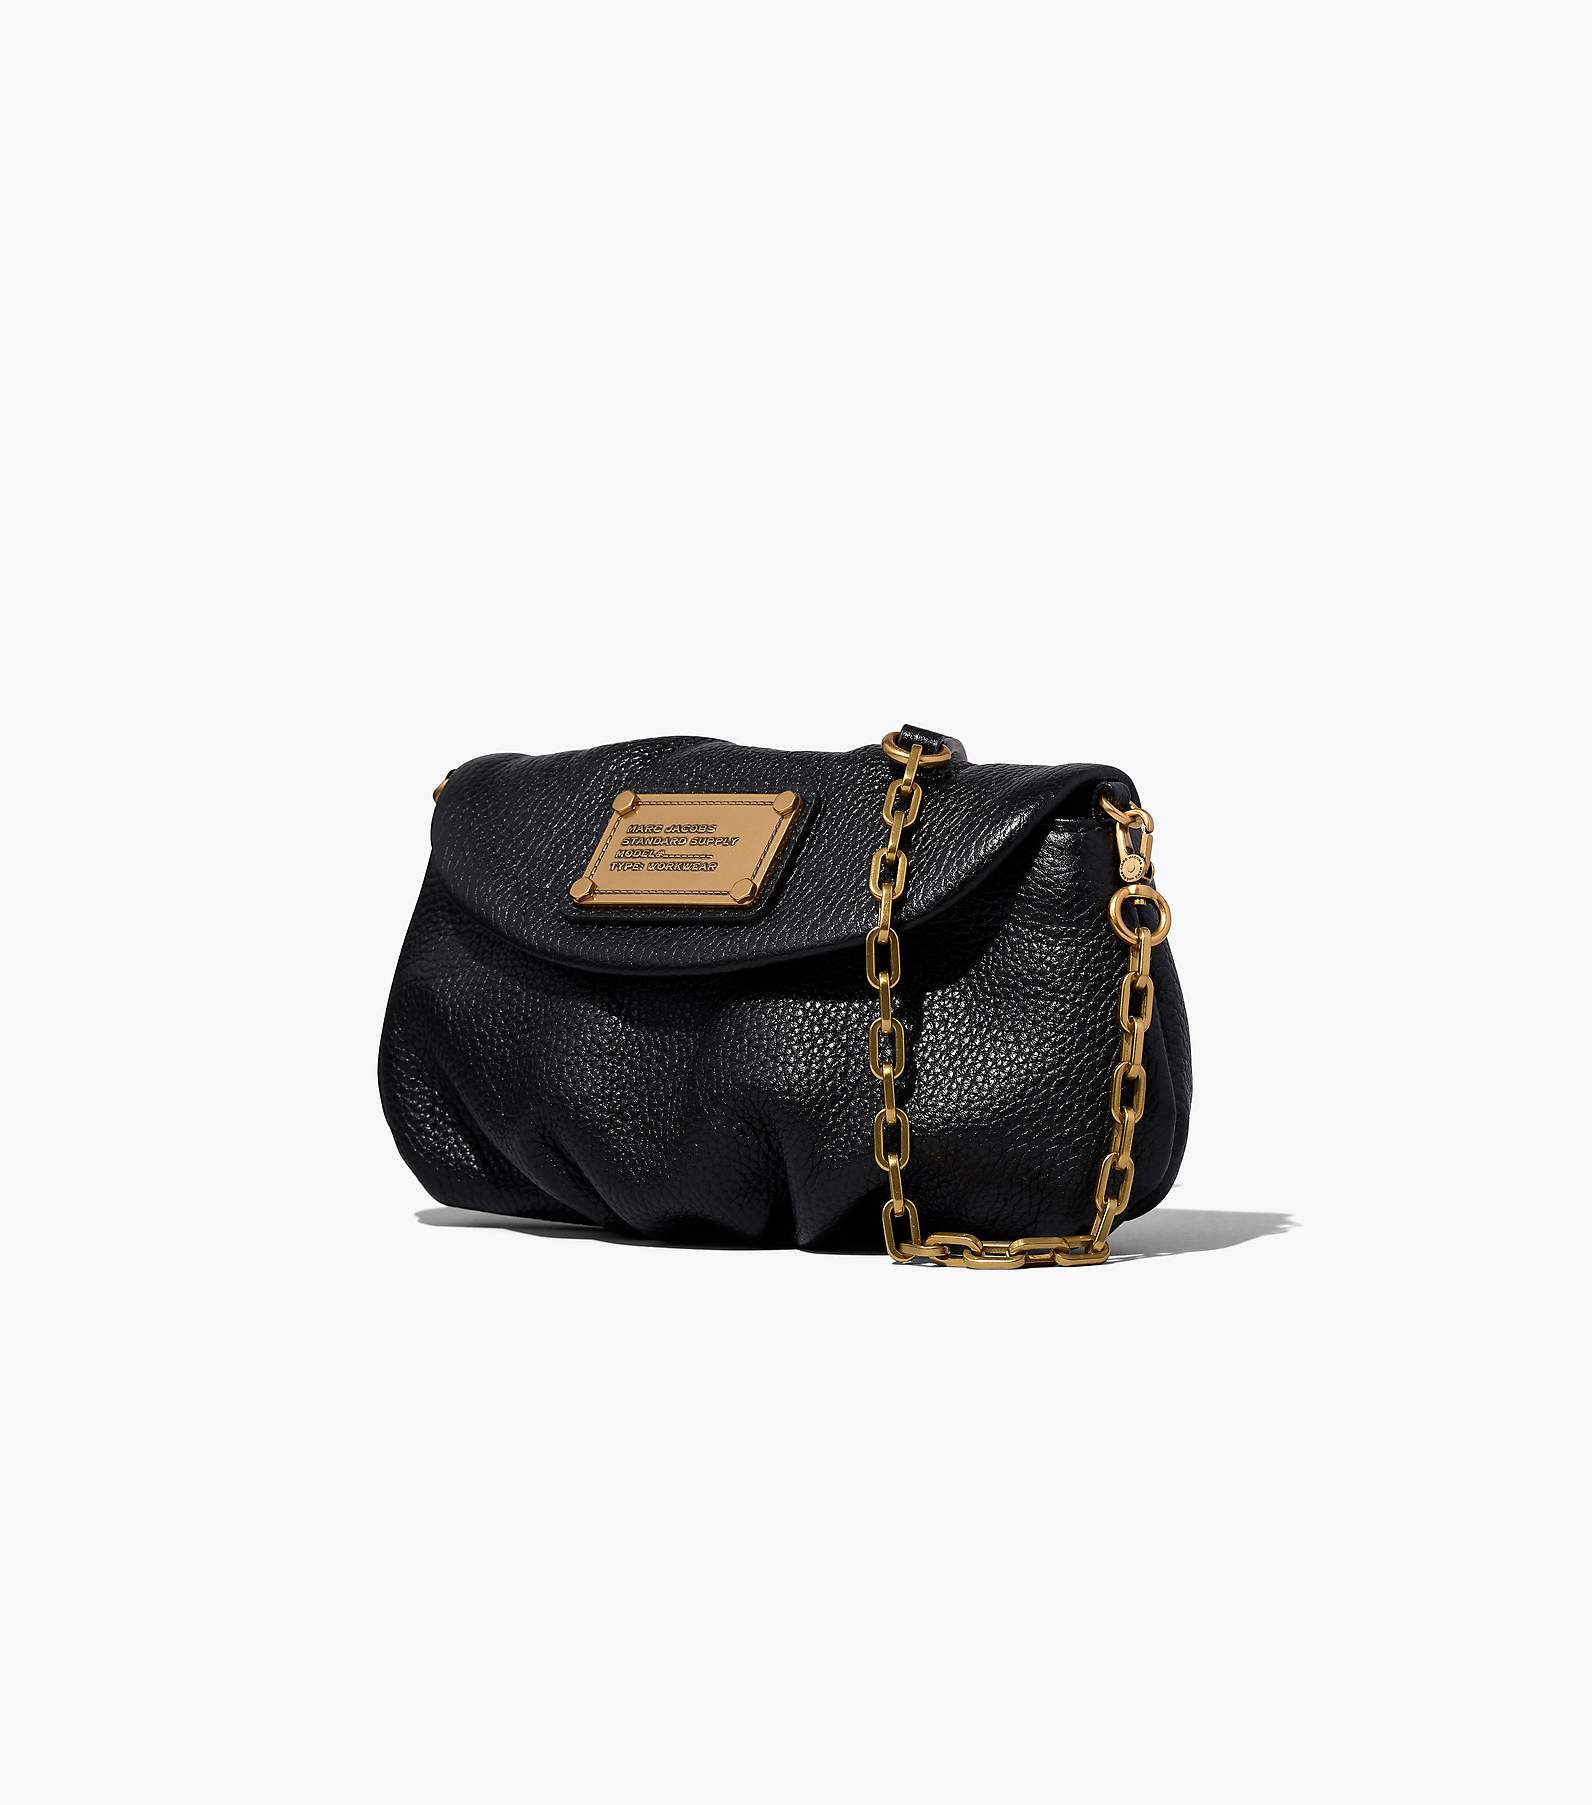 Re-Edition Karlie Bag | Marc Jacobs | Official Site